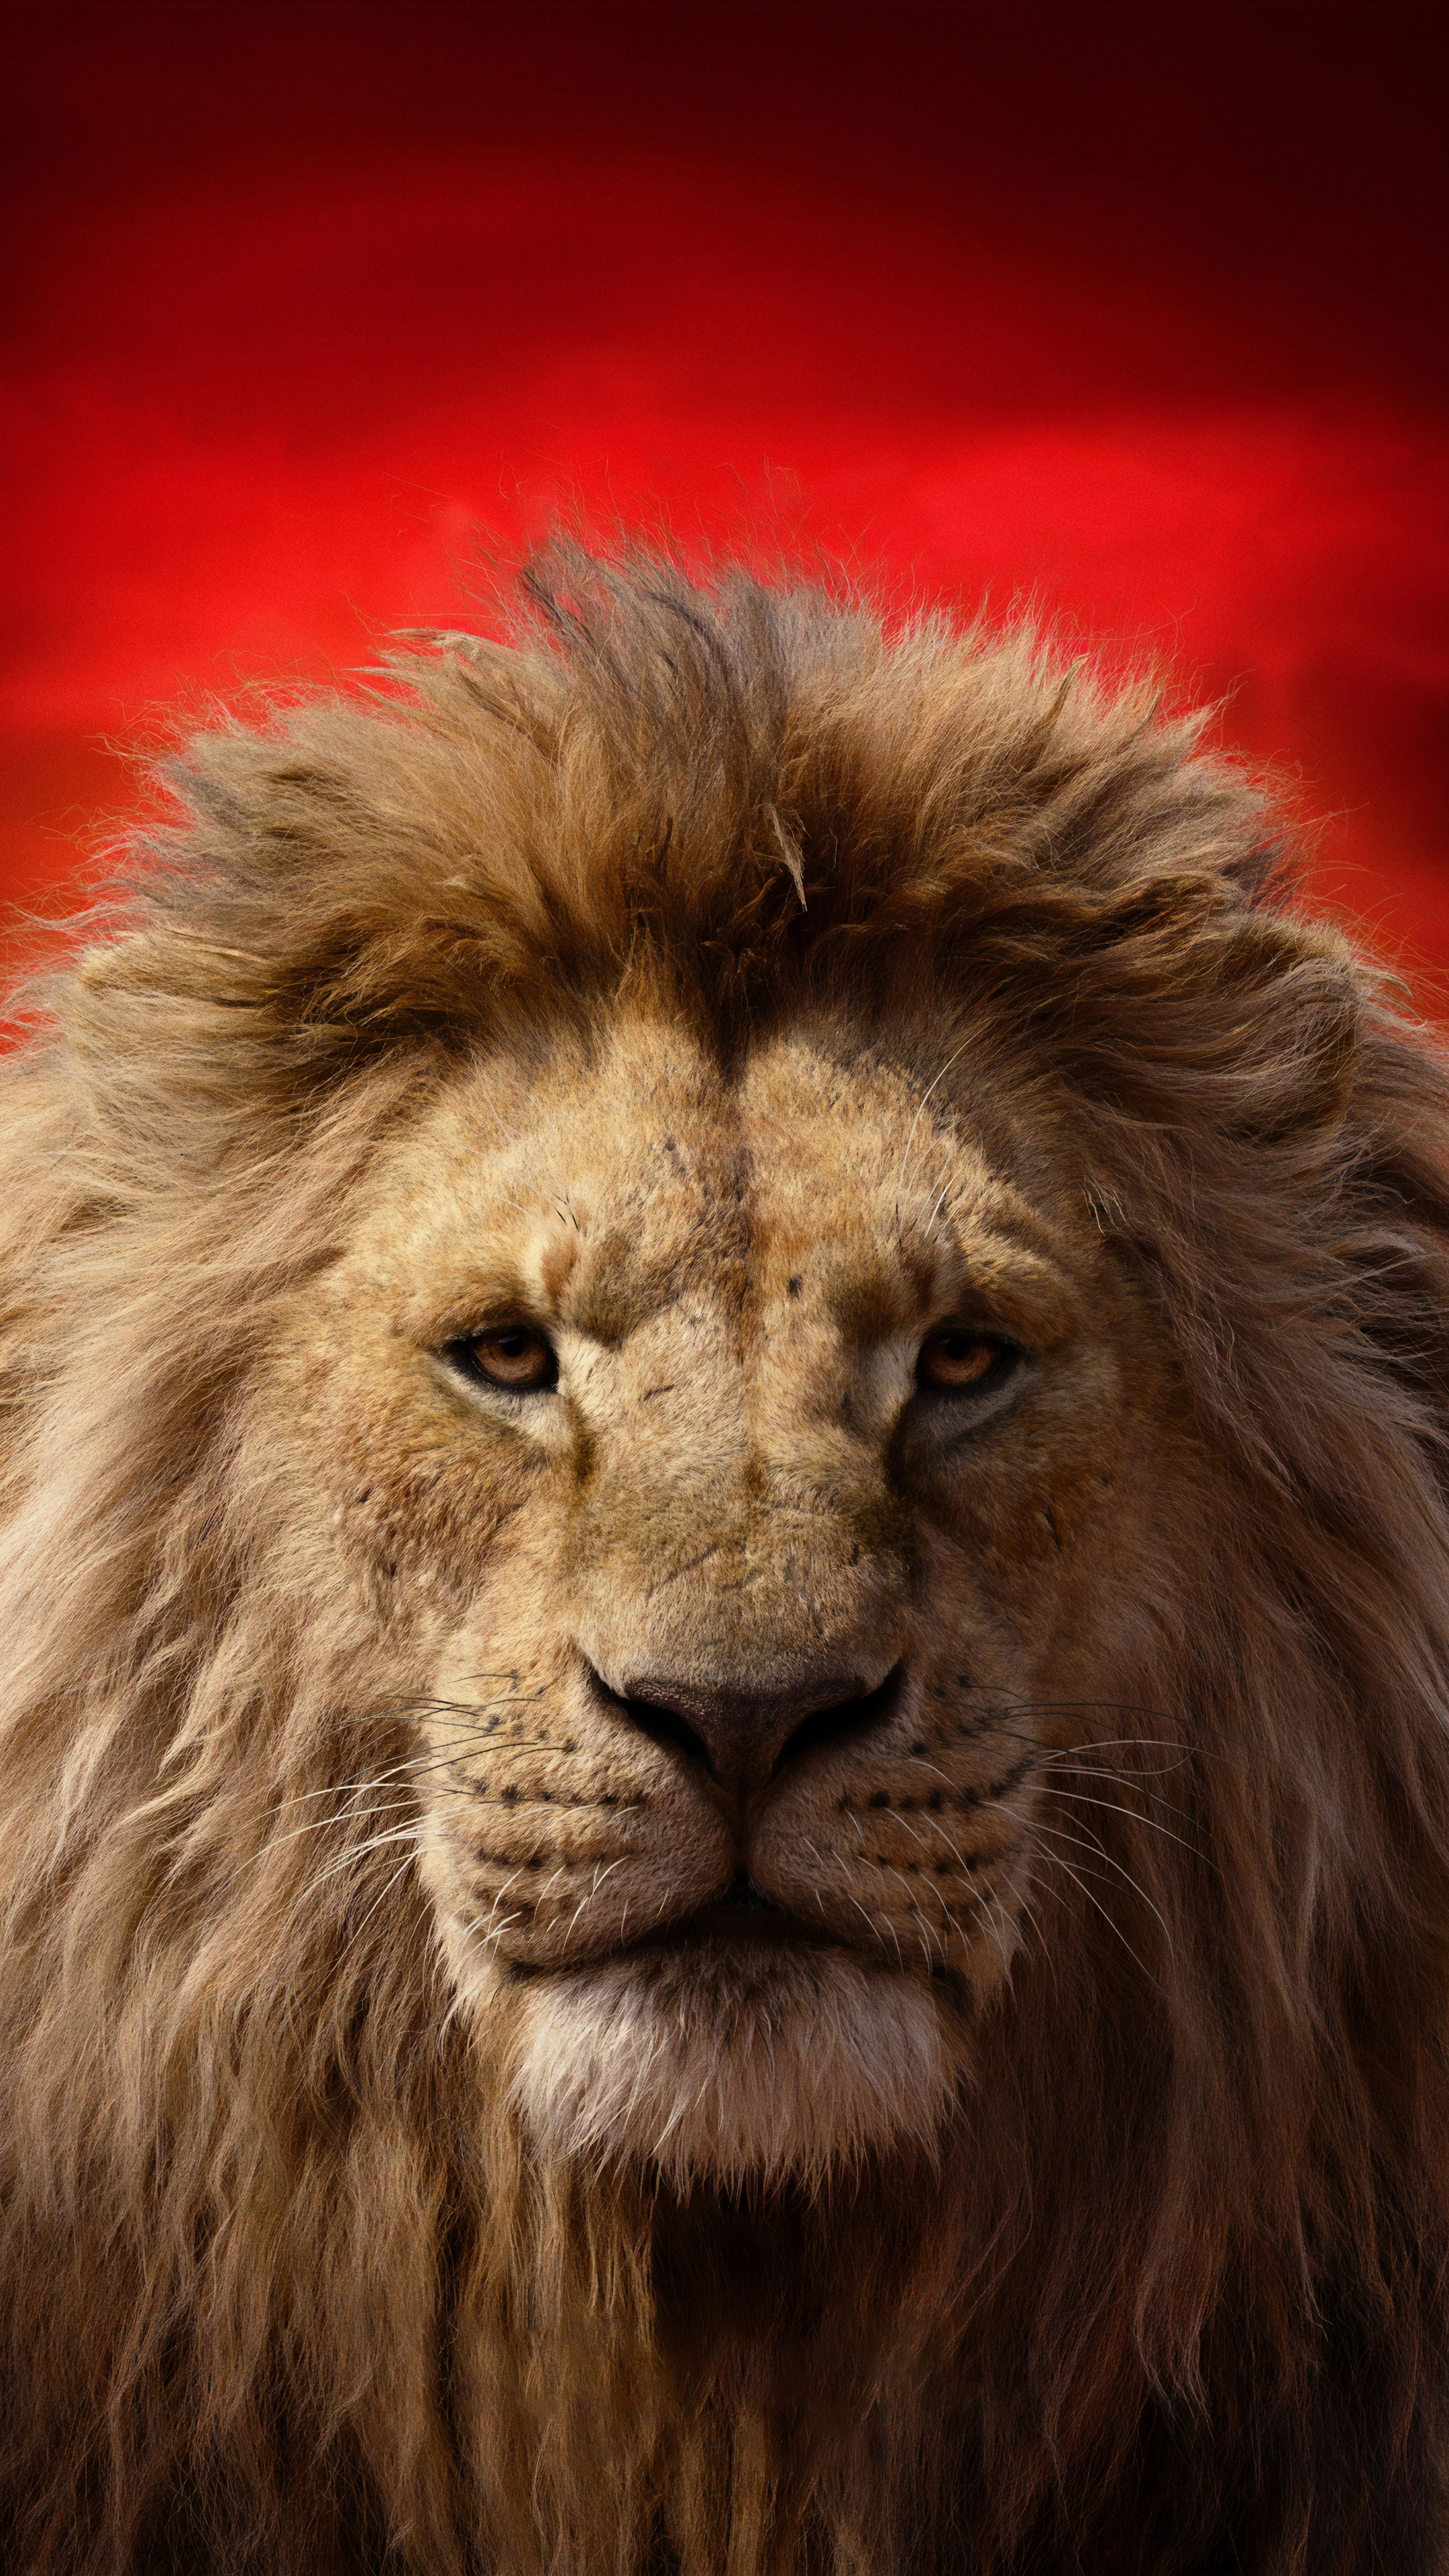 The Lion King, James Earl Jones as Mufasa, Stunning 4K imagery, Iconic characters, 2160x3840 4K Handy